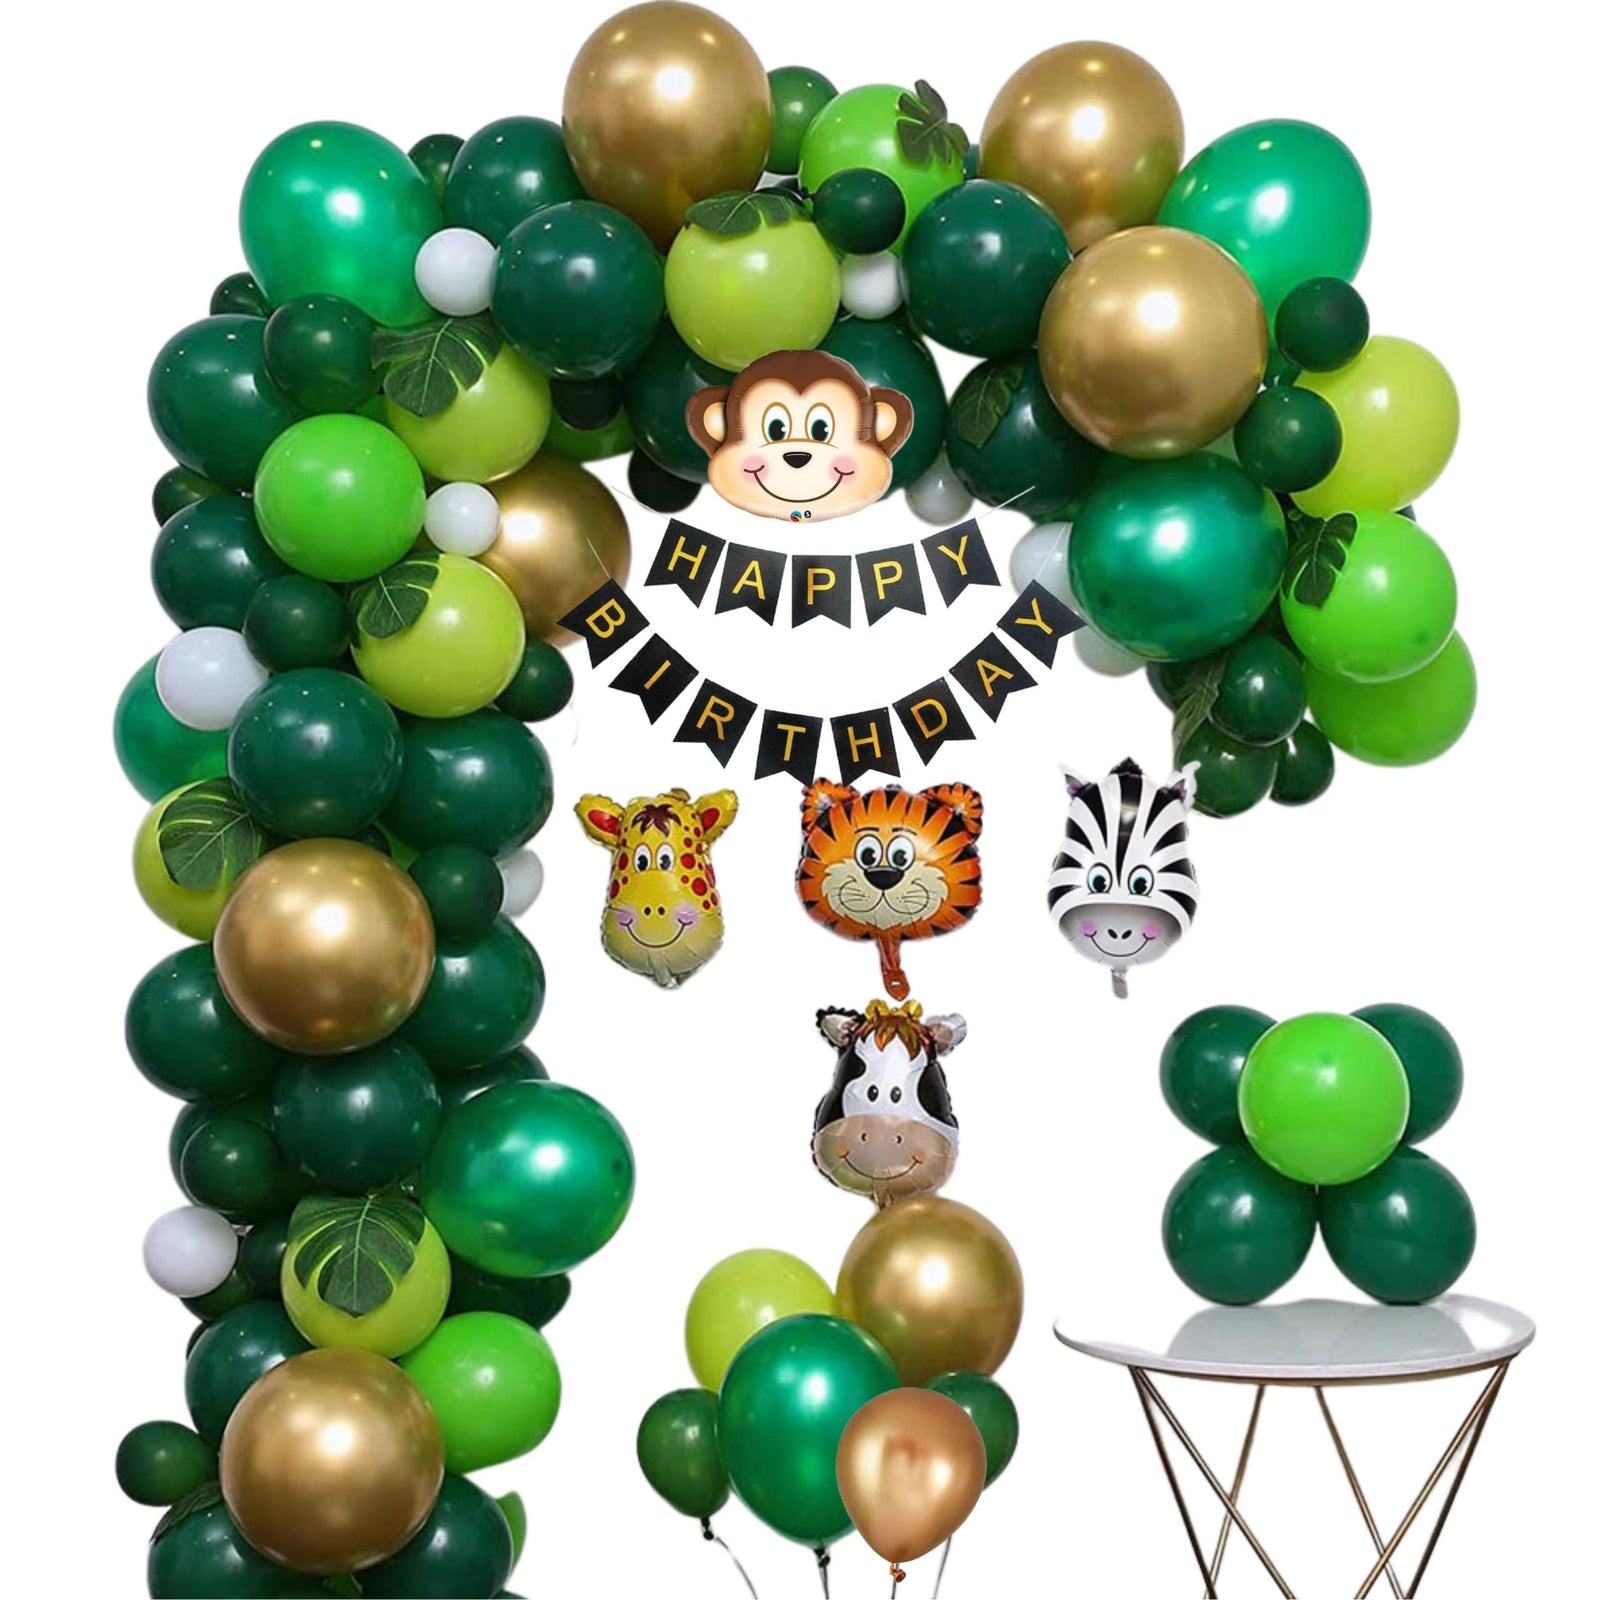 Party Birthday Decorations Black white Theme Balloons Arch Kit Backdrop  94Pcs